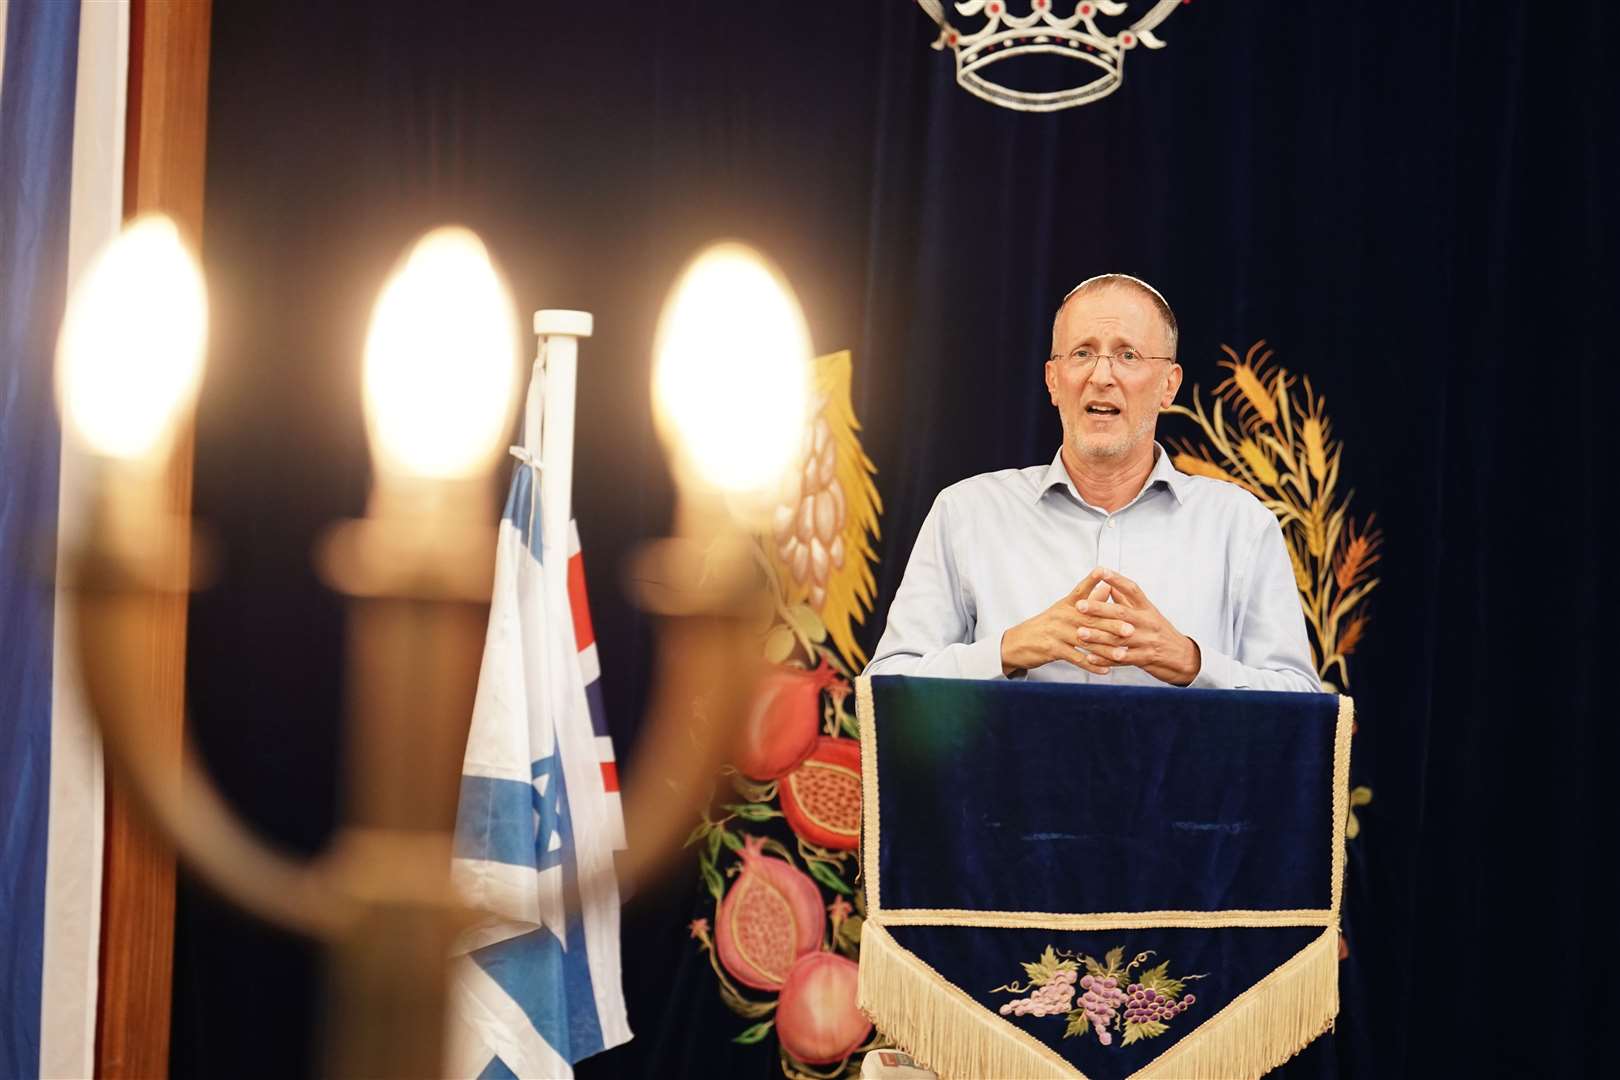 Rabbi Leo Dee delivers a speech at Kinloss synagogue in London (Jordan Pettitt/PA)